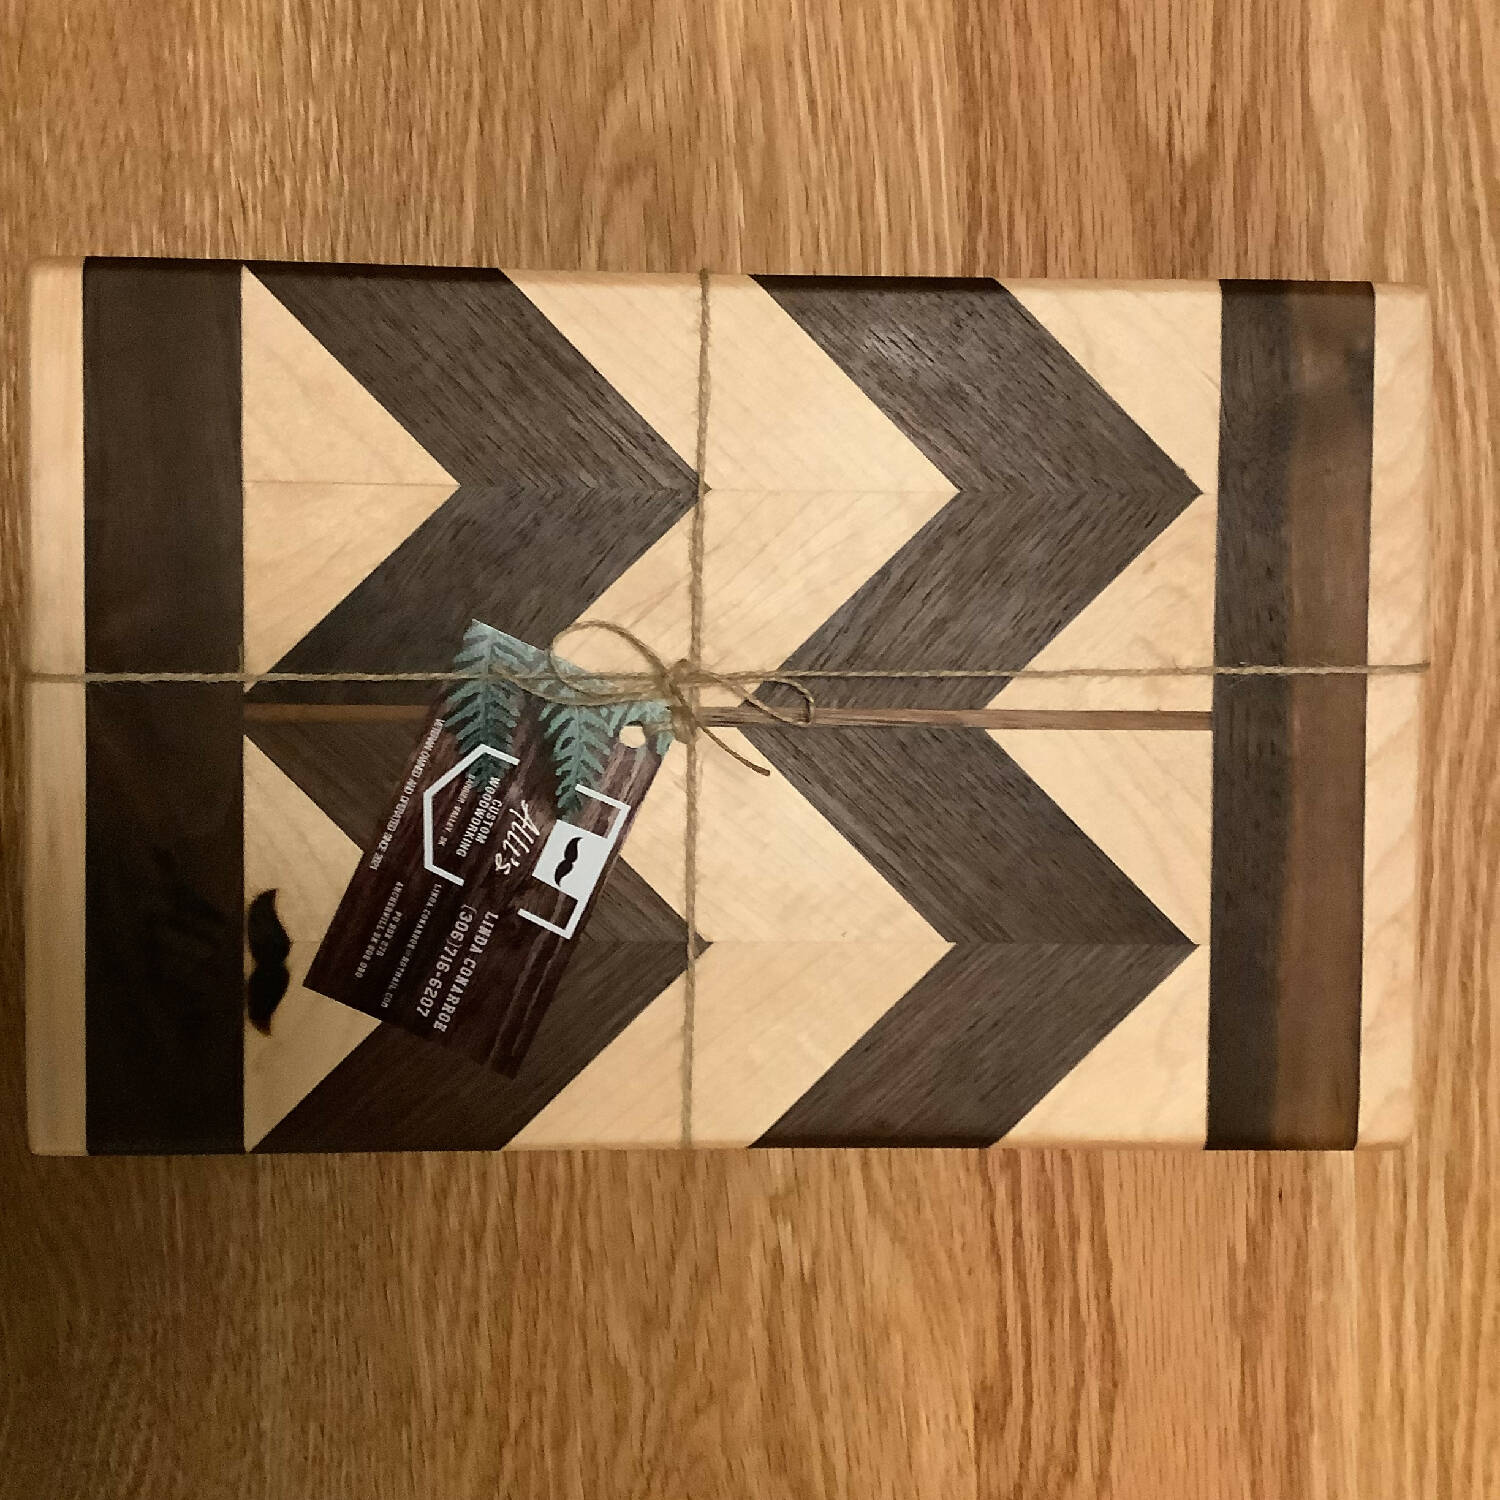 12” x 7.5” chevron pattern walnut and maple cutting board